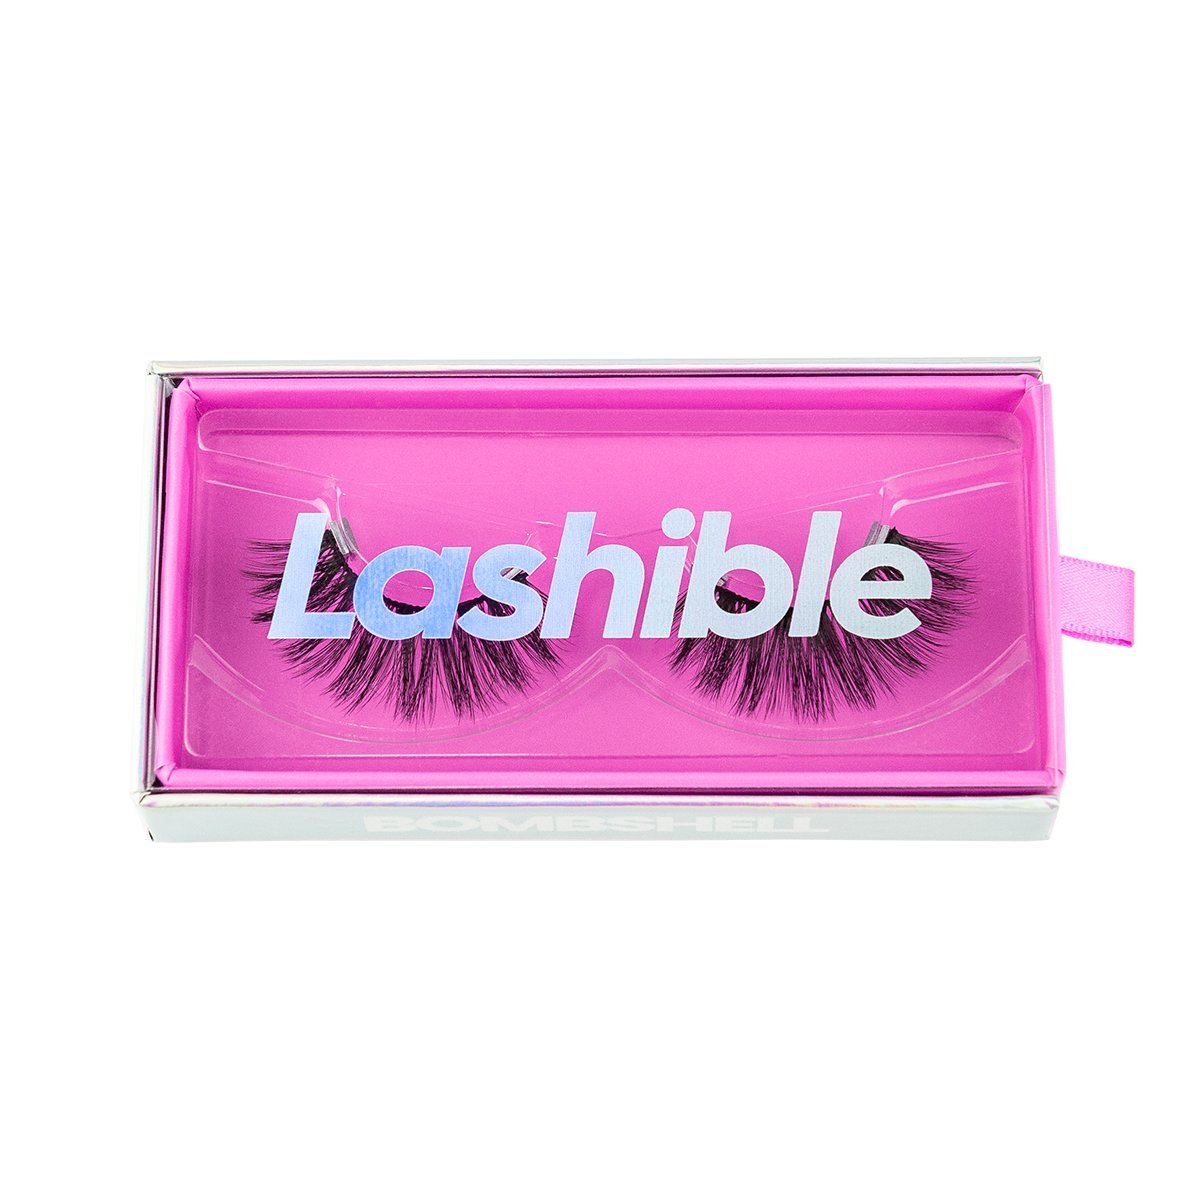 Bombshell Lashes Only - Lashible